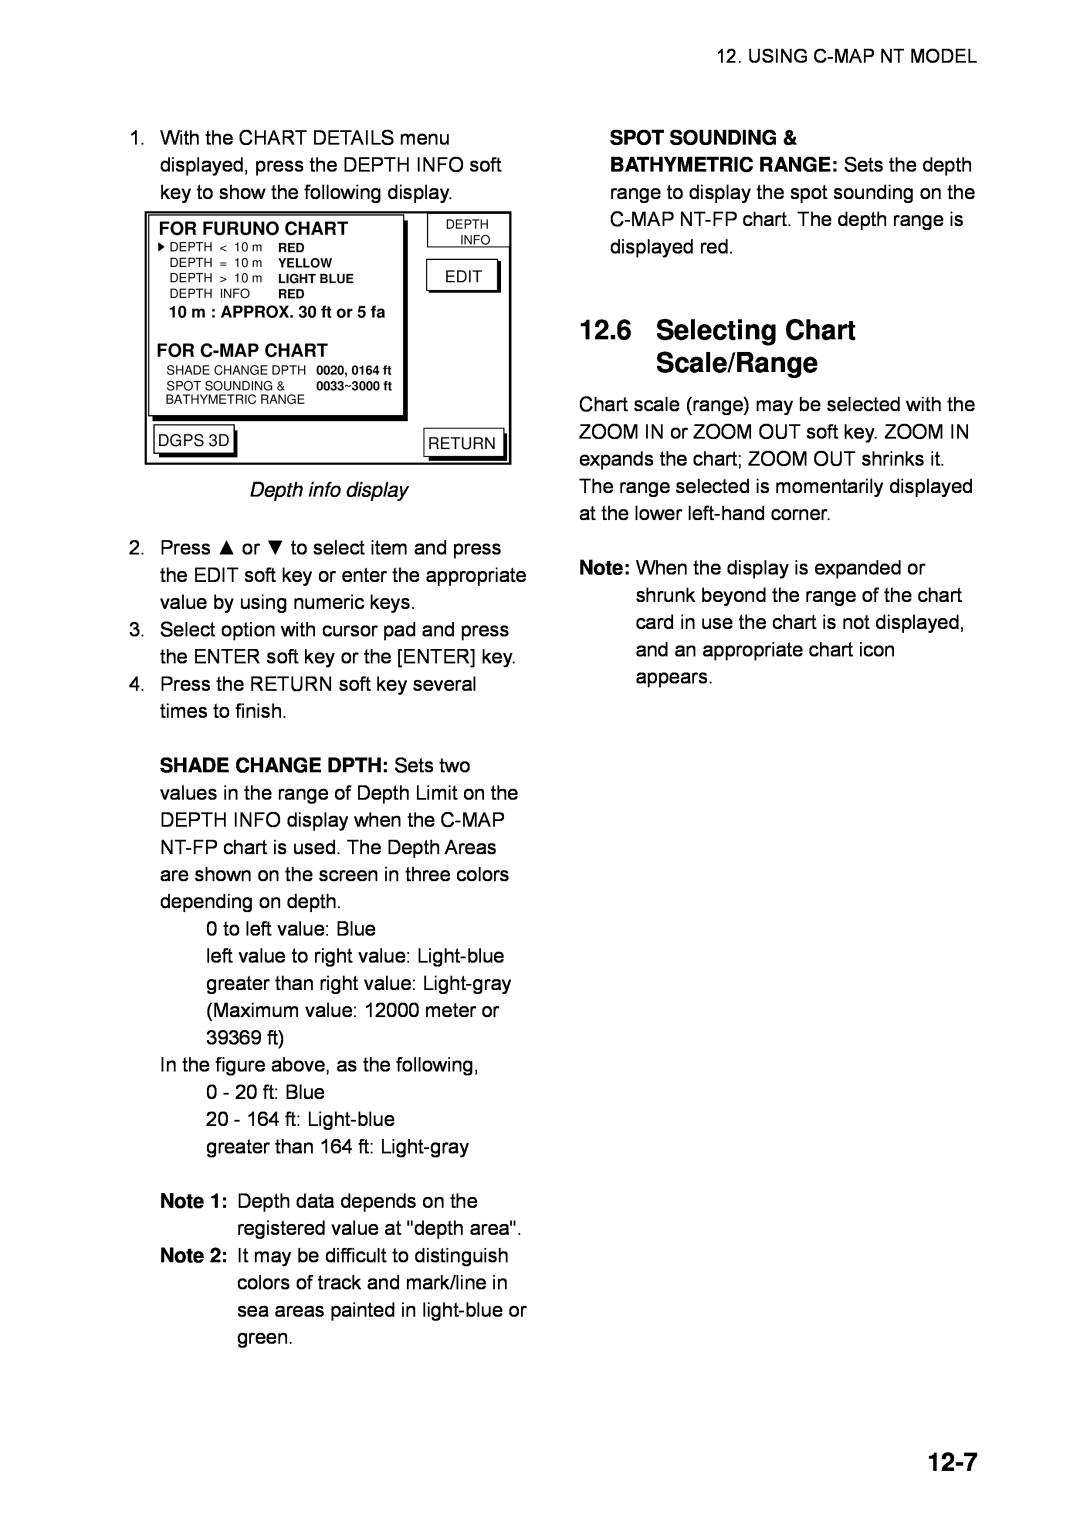 Furuno GP-1850WF, GP-1850WDF manual Selecting Chart Scale/Range, 12-7, Spot Sounding, Depth info display 